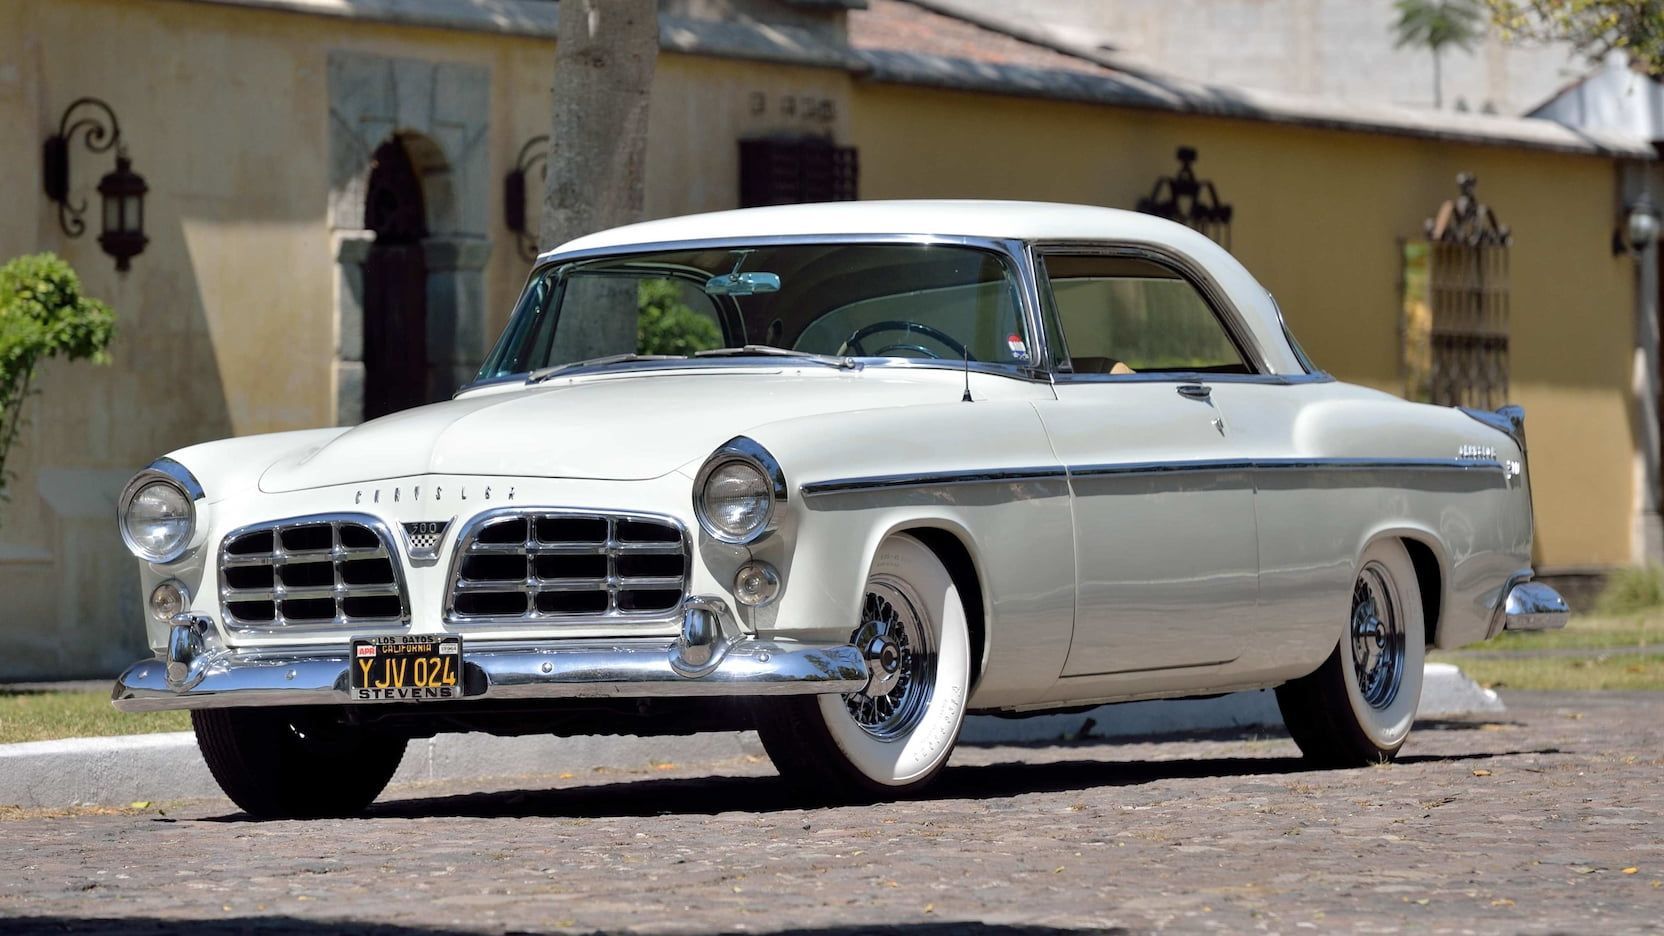 the 1955 Chrysler 300 parked outside